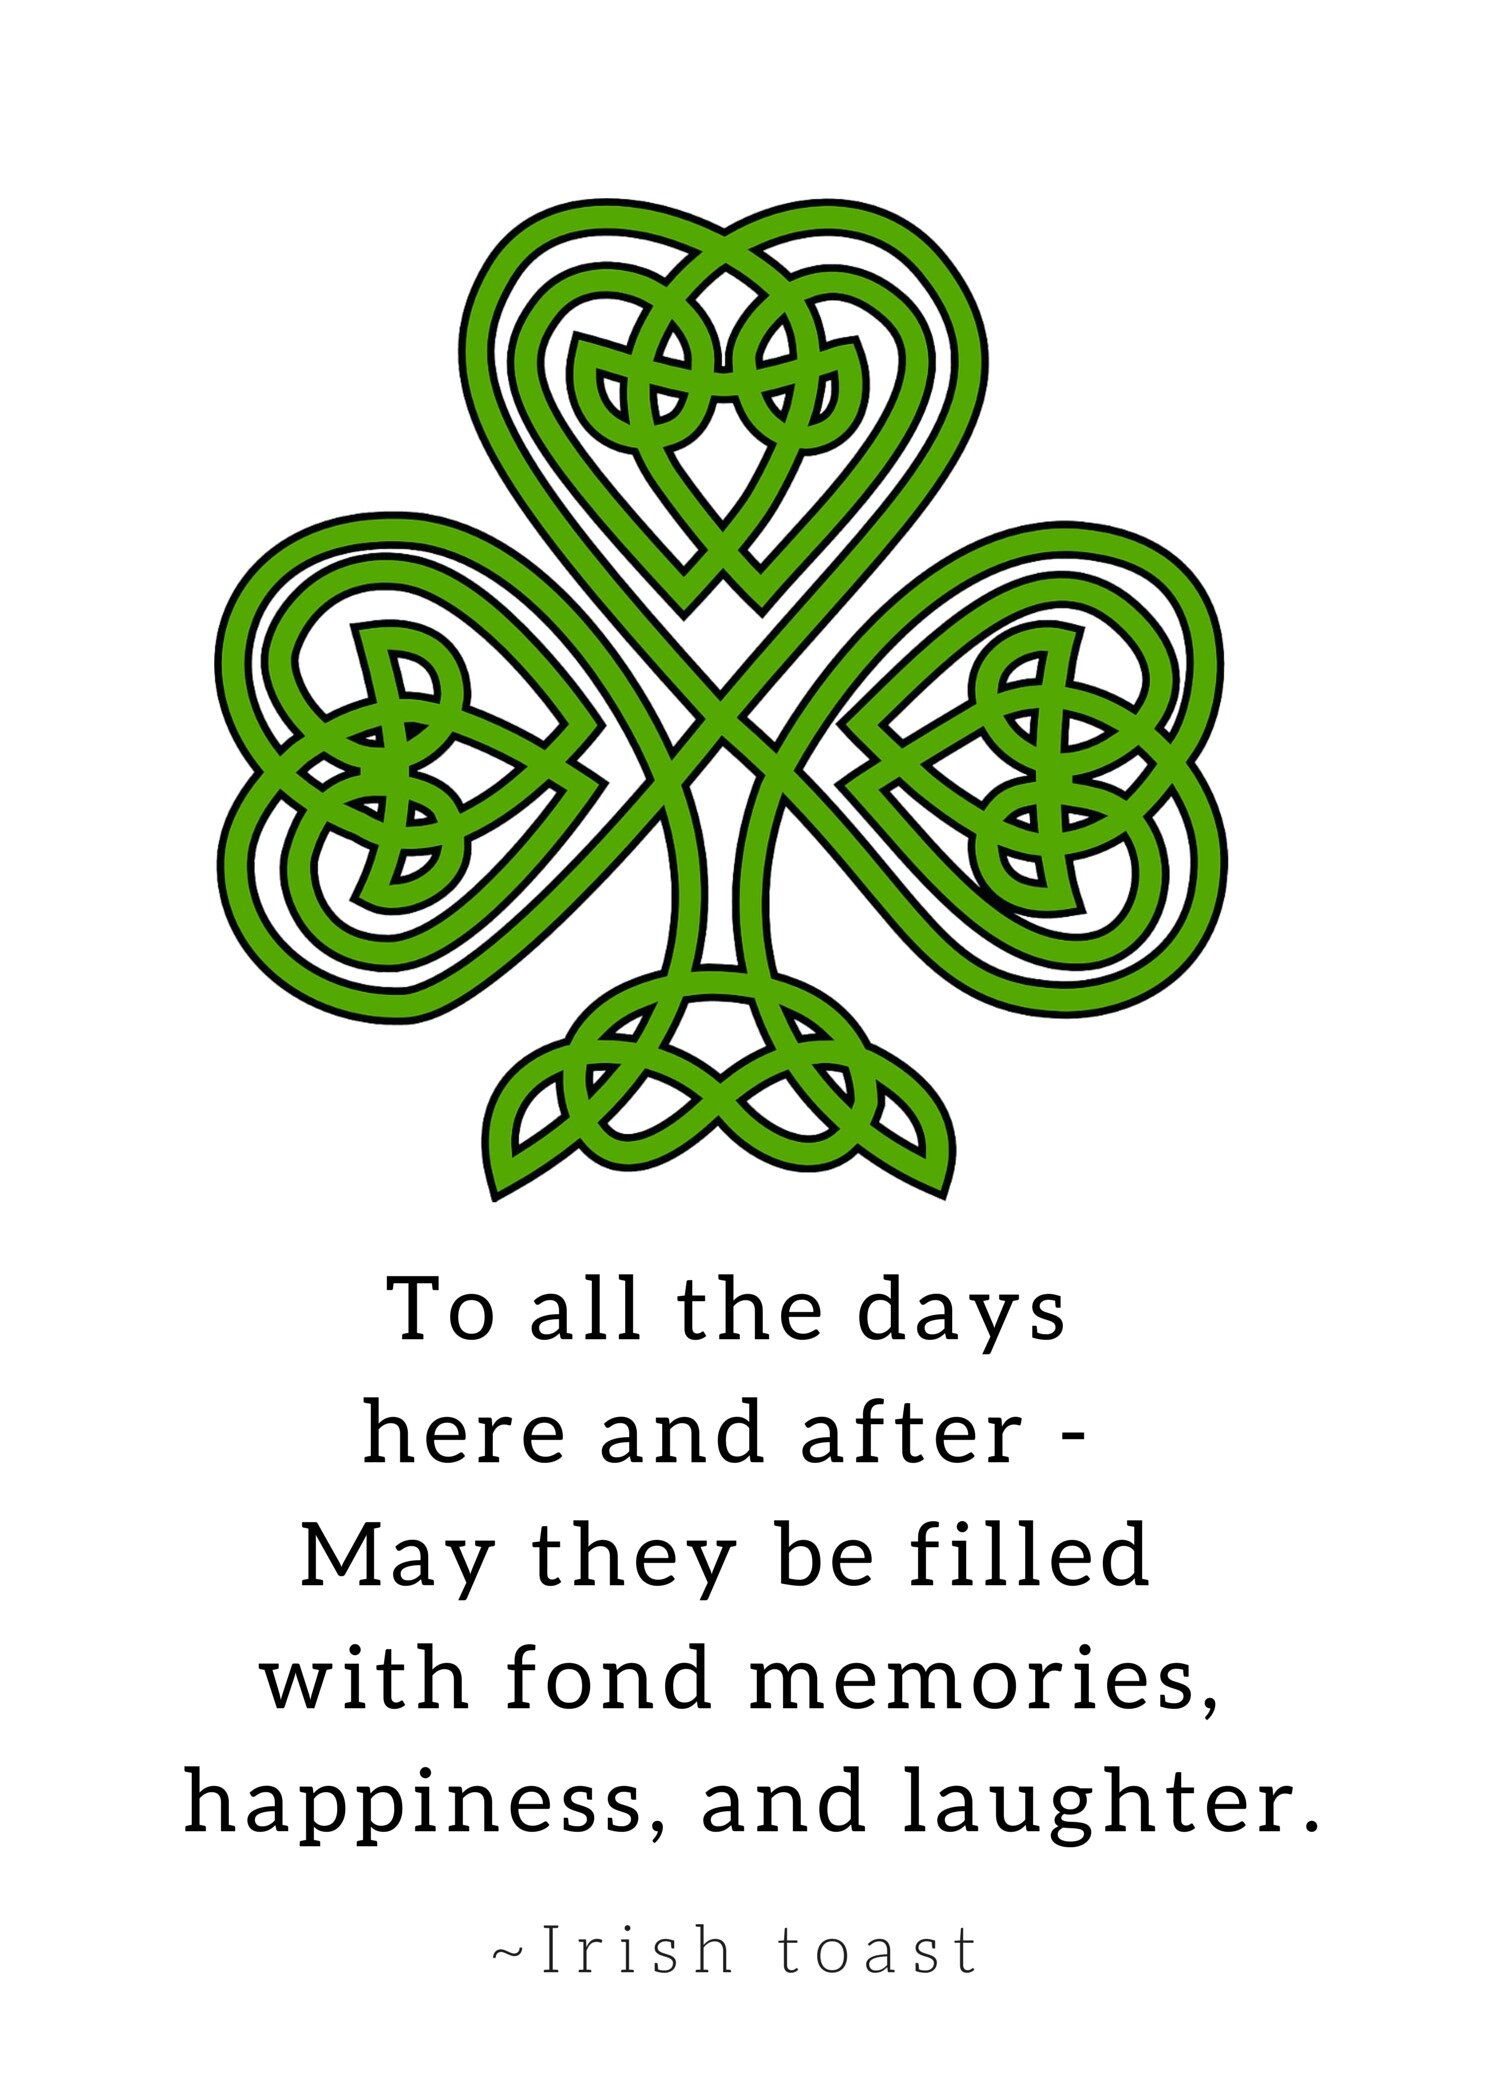 Irish toast - St. Patrick's Day - AMerryMom.com